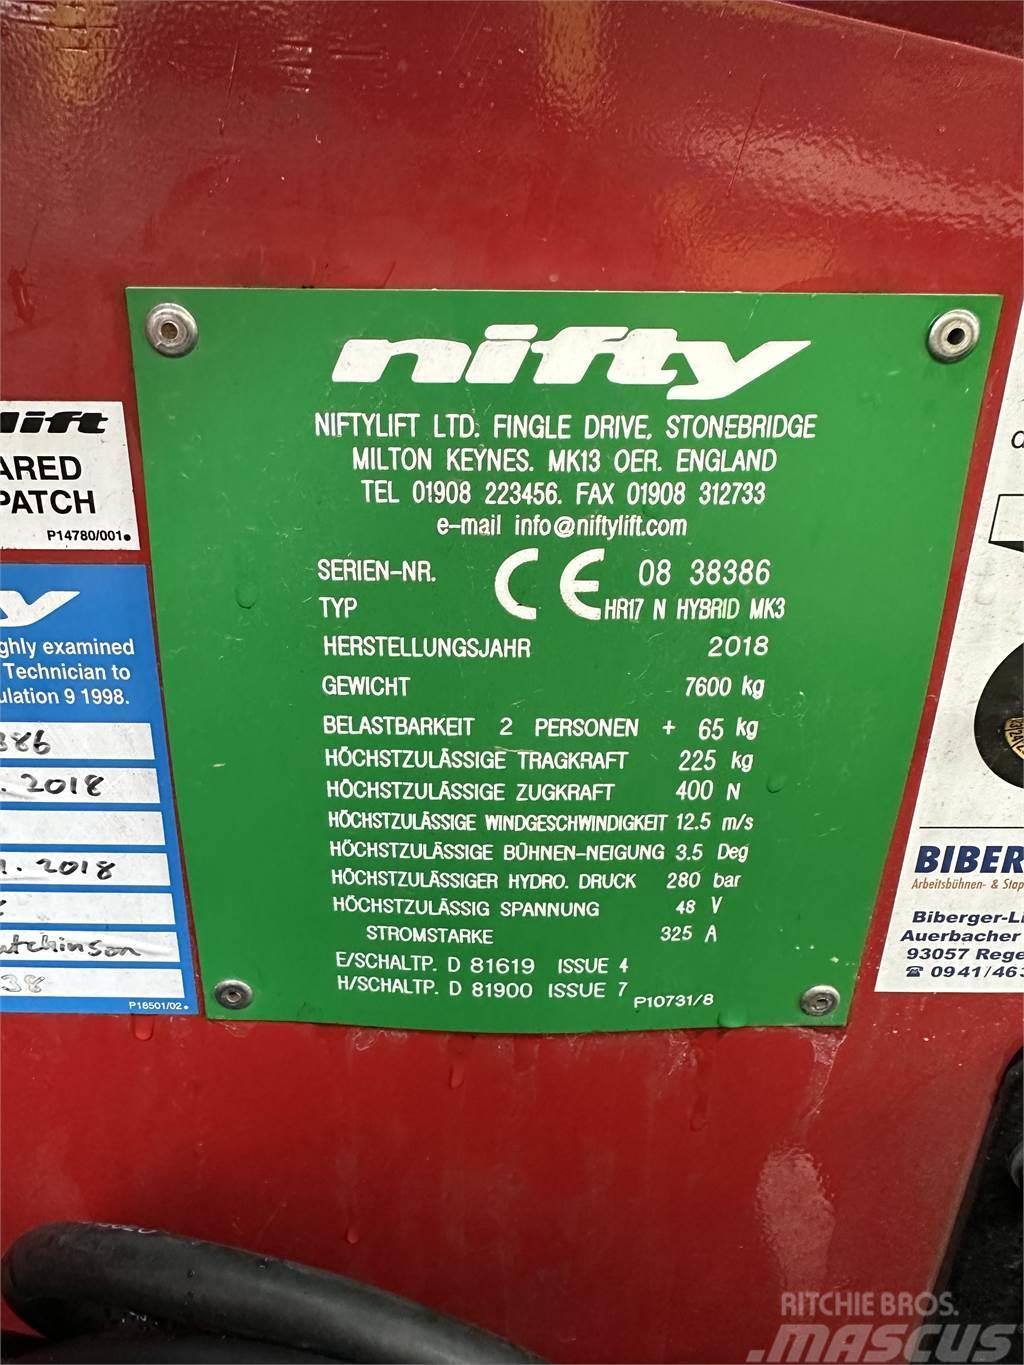 Niftylift HR 17 N HYBRID MK3 Elevadores braços articulados